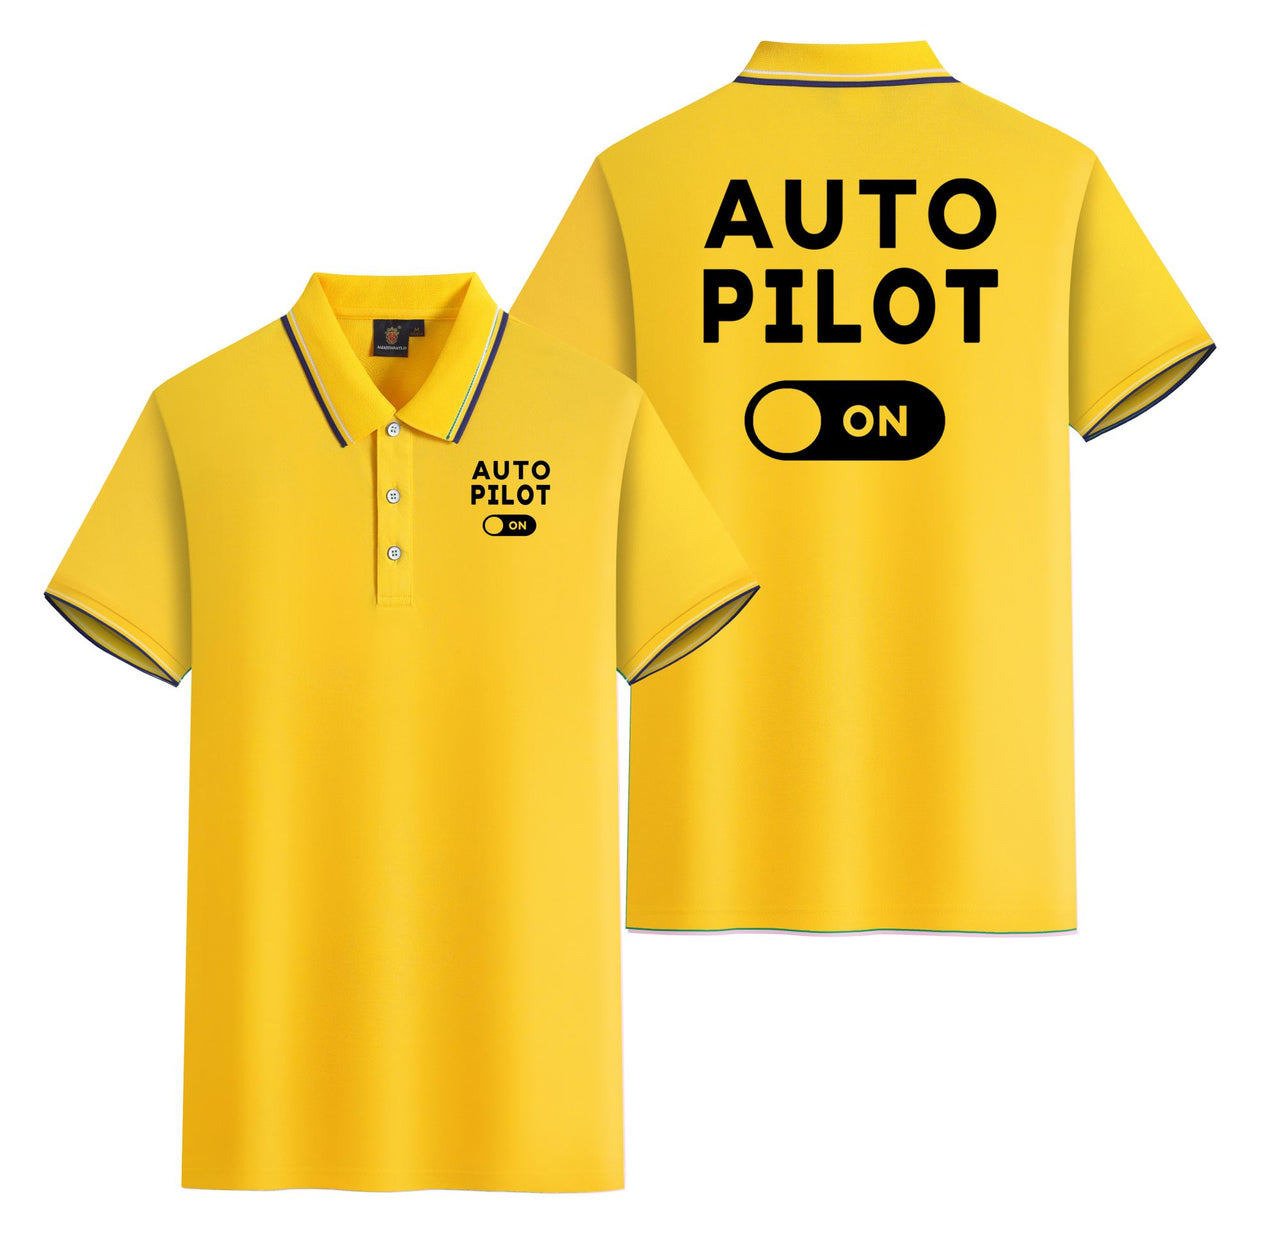 Auto Pilot ON Designed Stylish Polo T-Shirts (Double-Side)